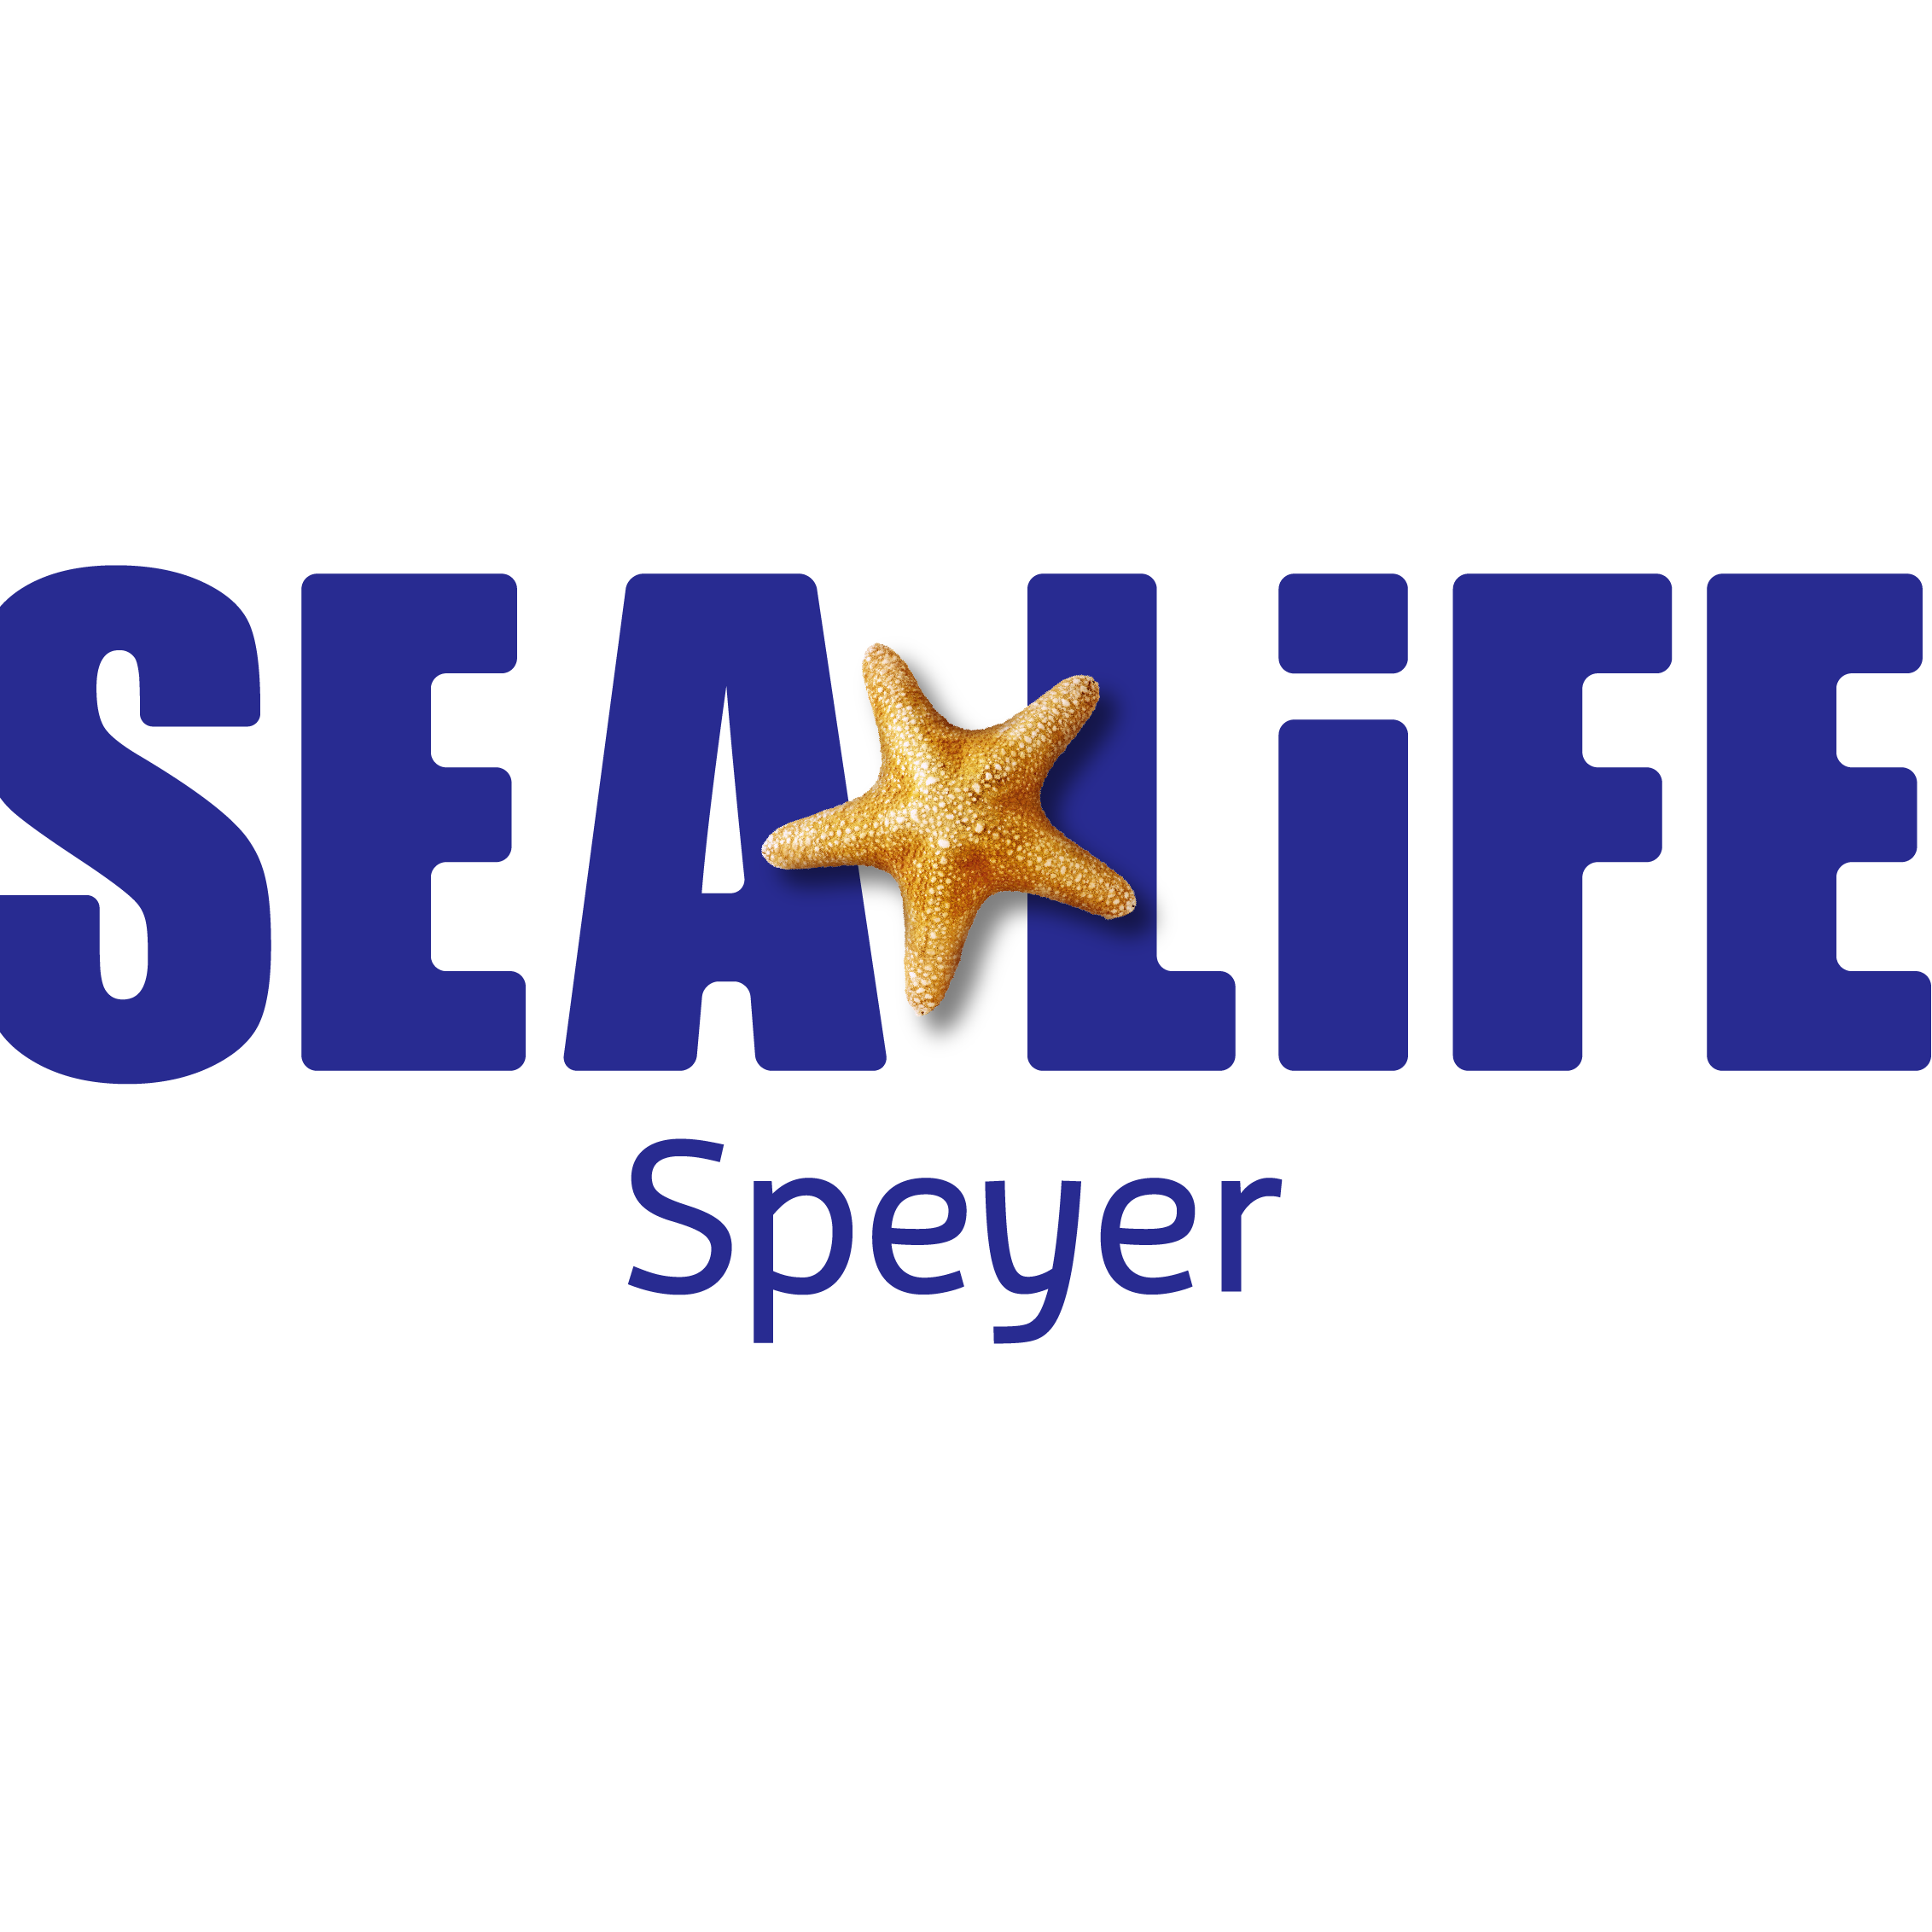 SEA LIFE Speyer Logo